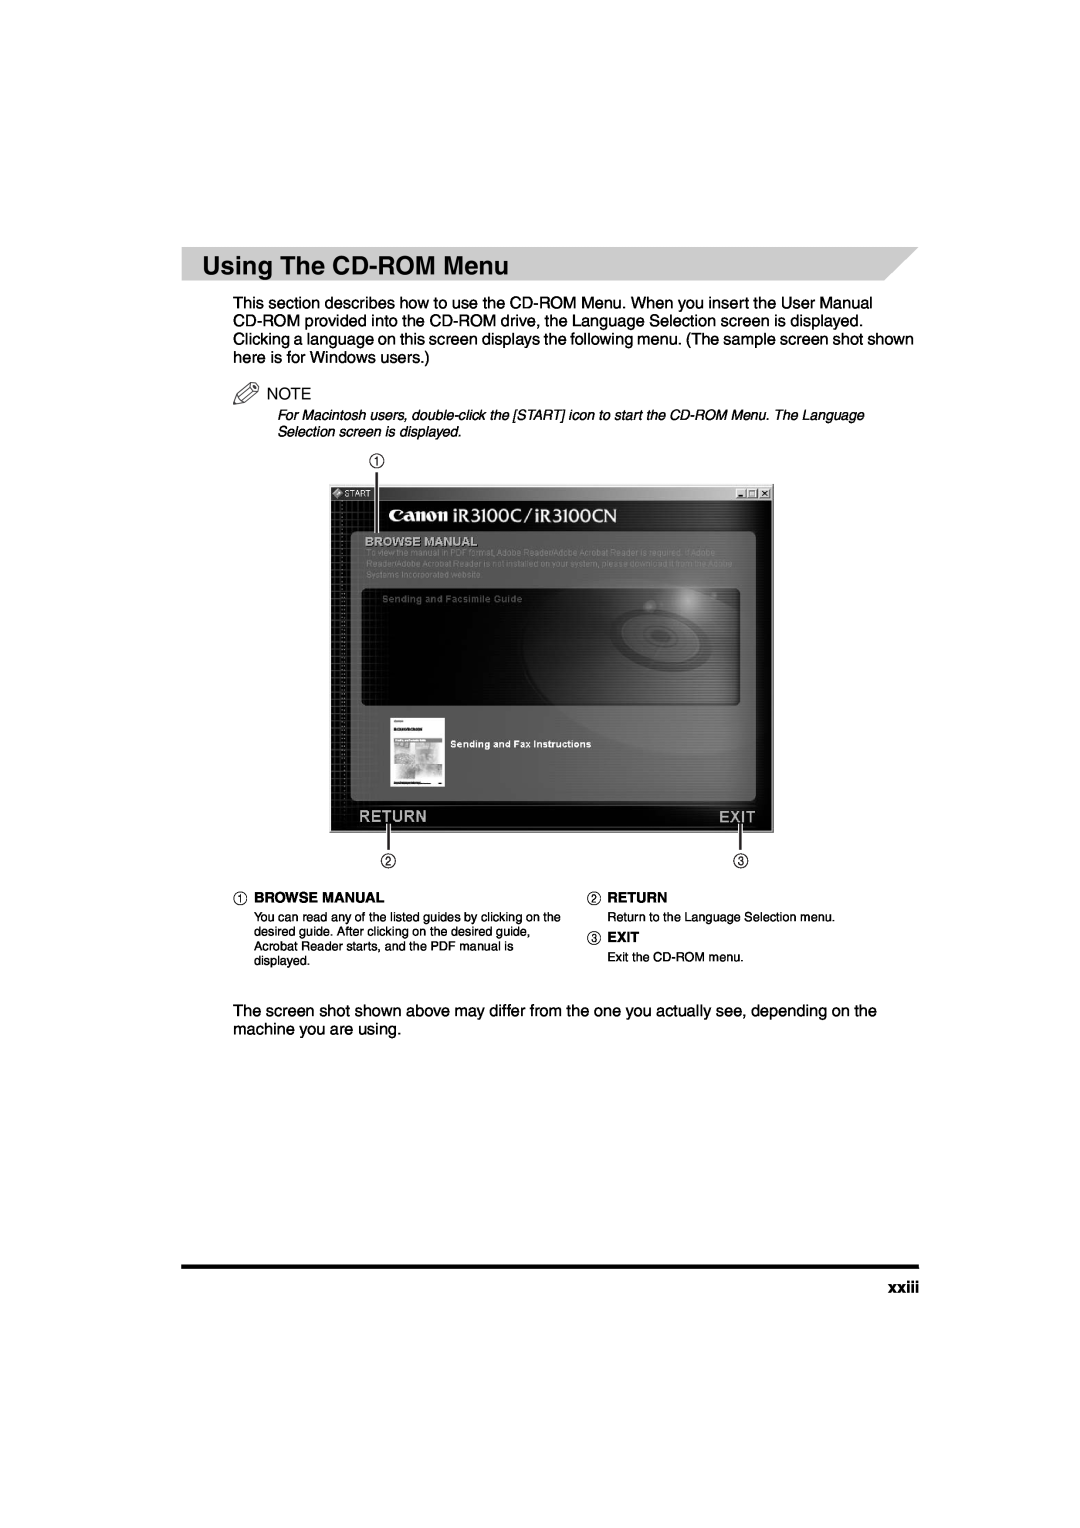 Canon iR6570 manual Using The CD-ROM Menu, xxiii, a BROWSE MANUAL, b RETURN, c EXIT 